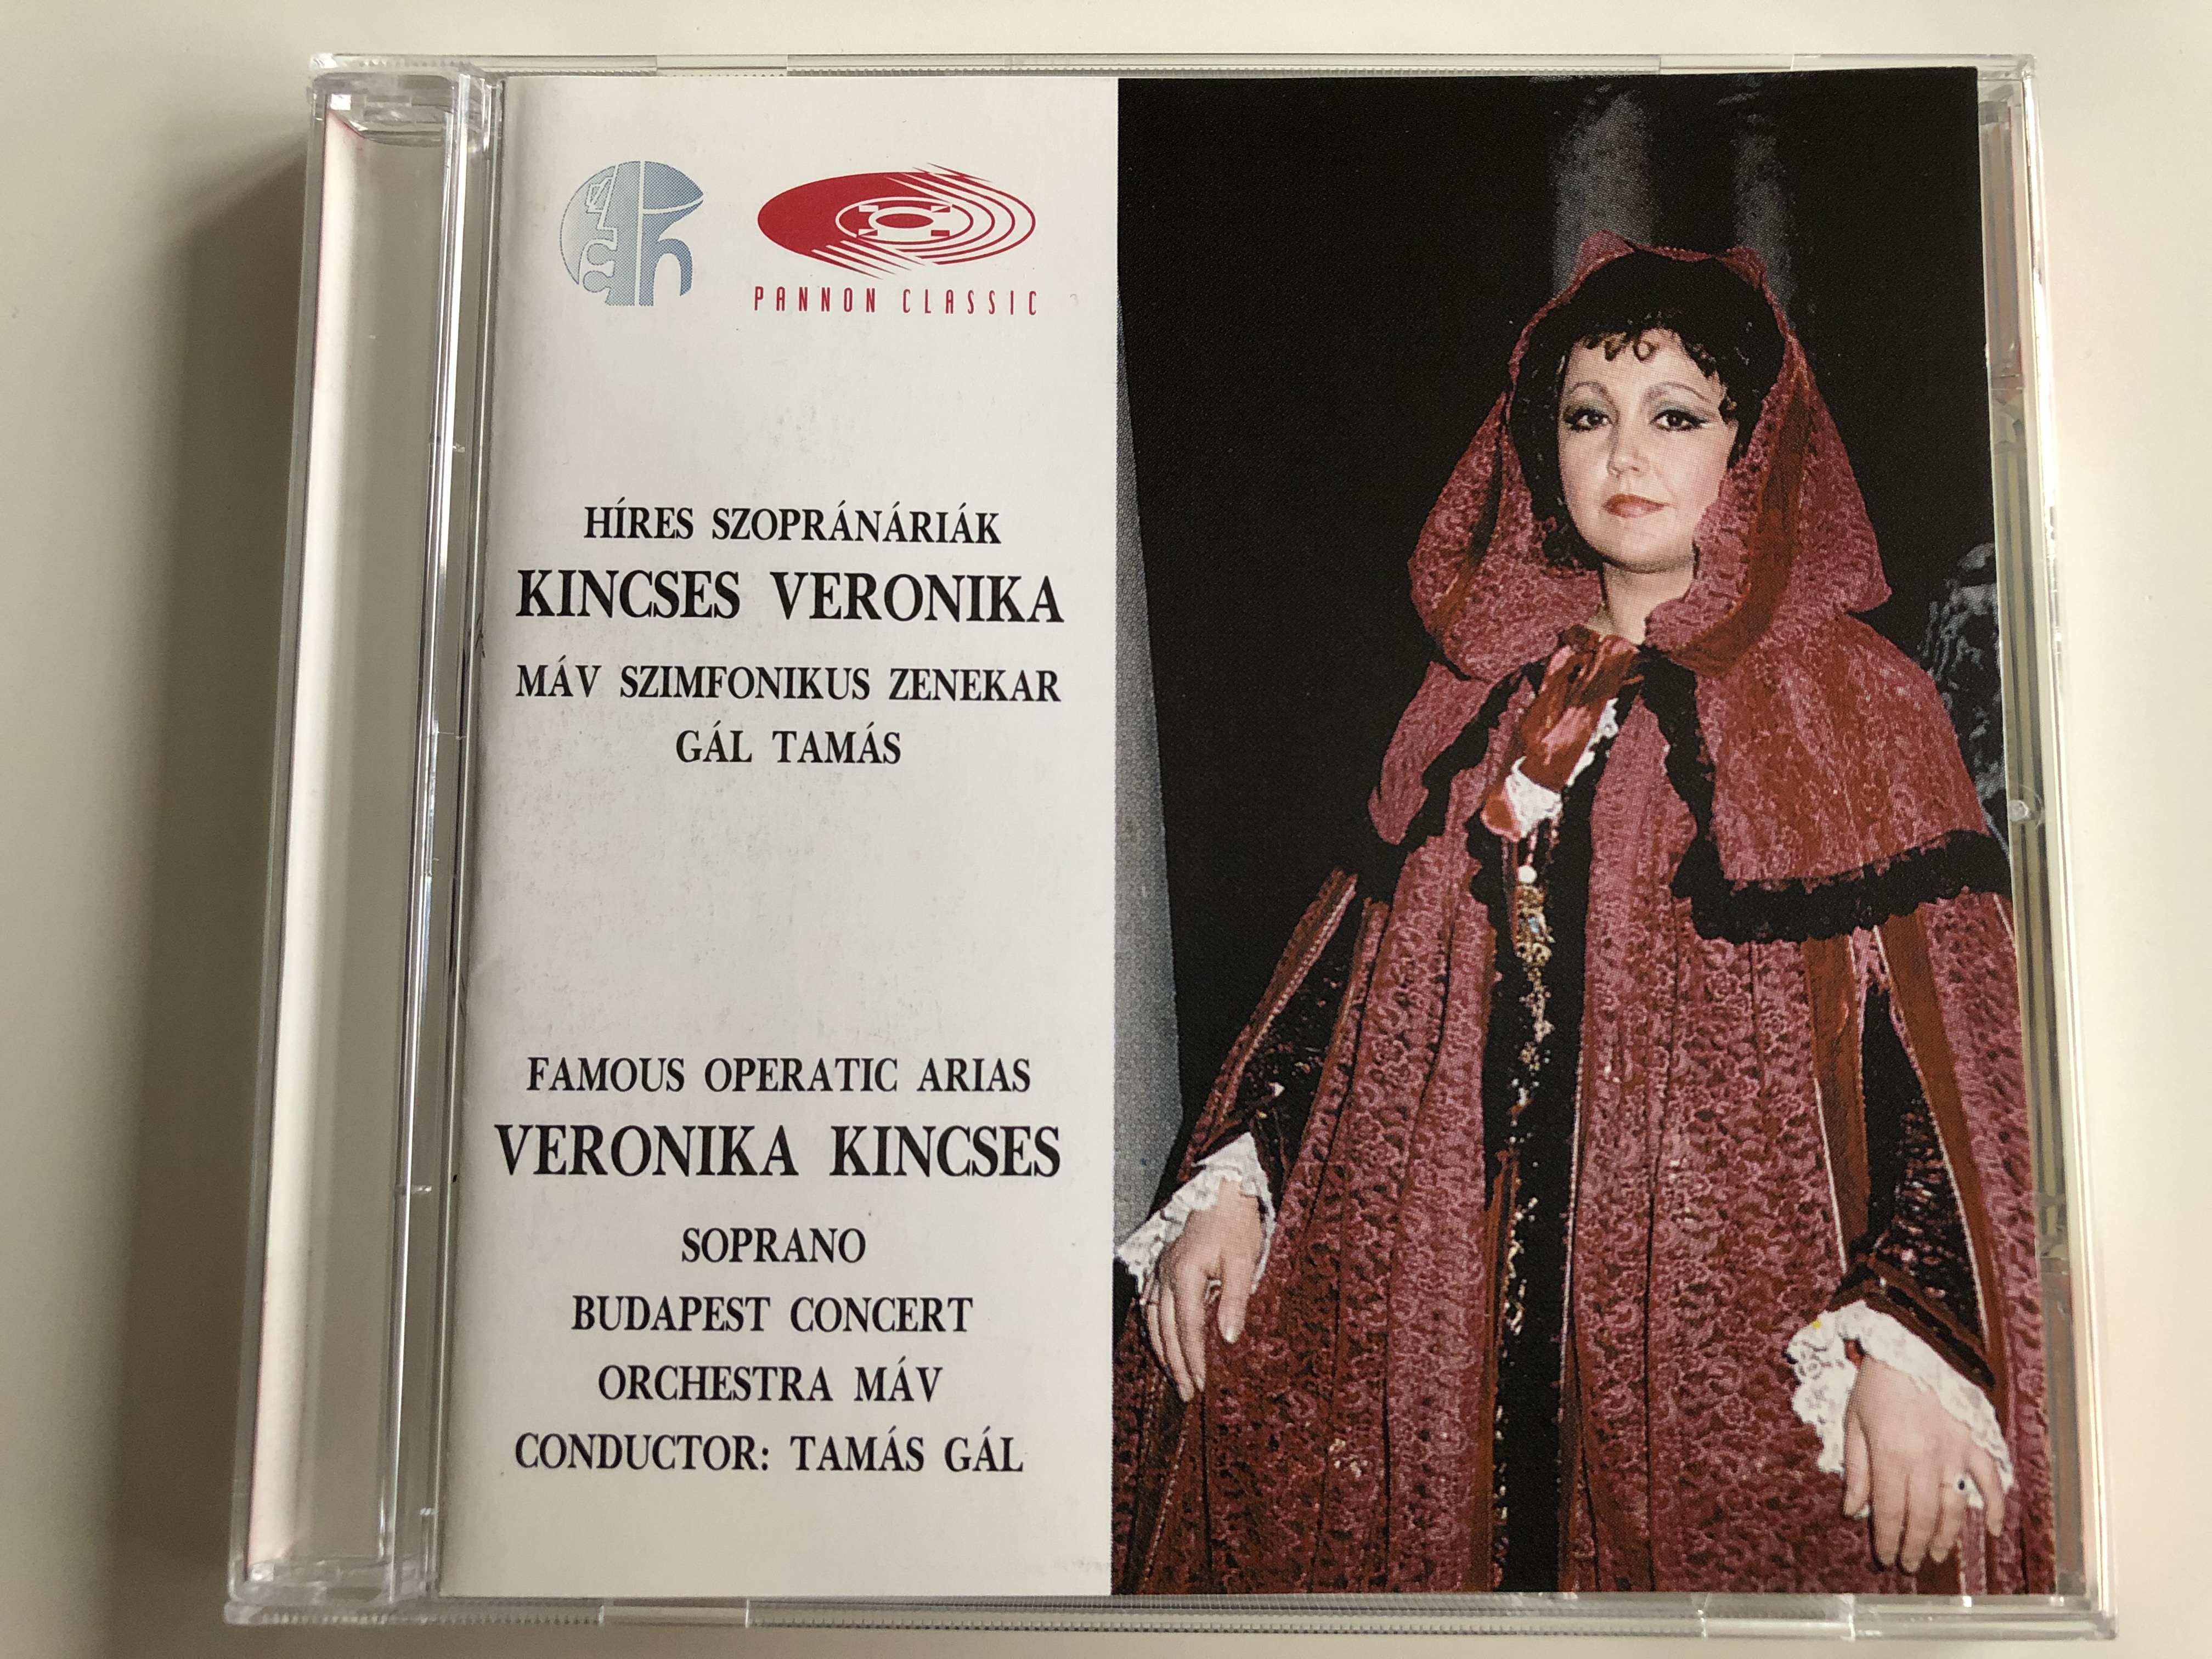 famous-operatic-arias-veronika-kincses-soprano-budapest-concert-orchestra-mav-conductor-tamas-gal-pannon-classic-audio-cd-2000-pcl-8017-1-.jpg